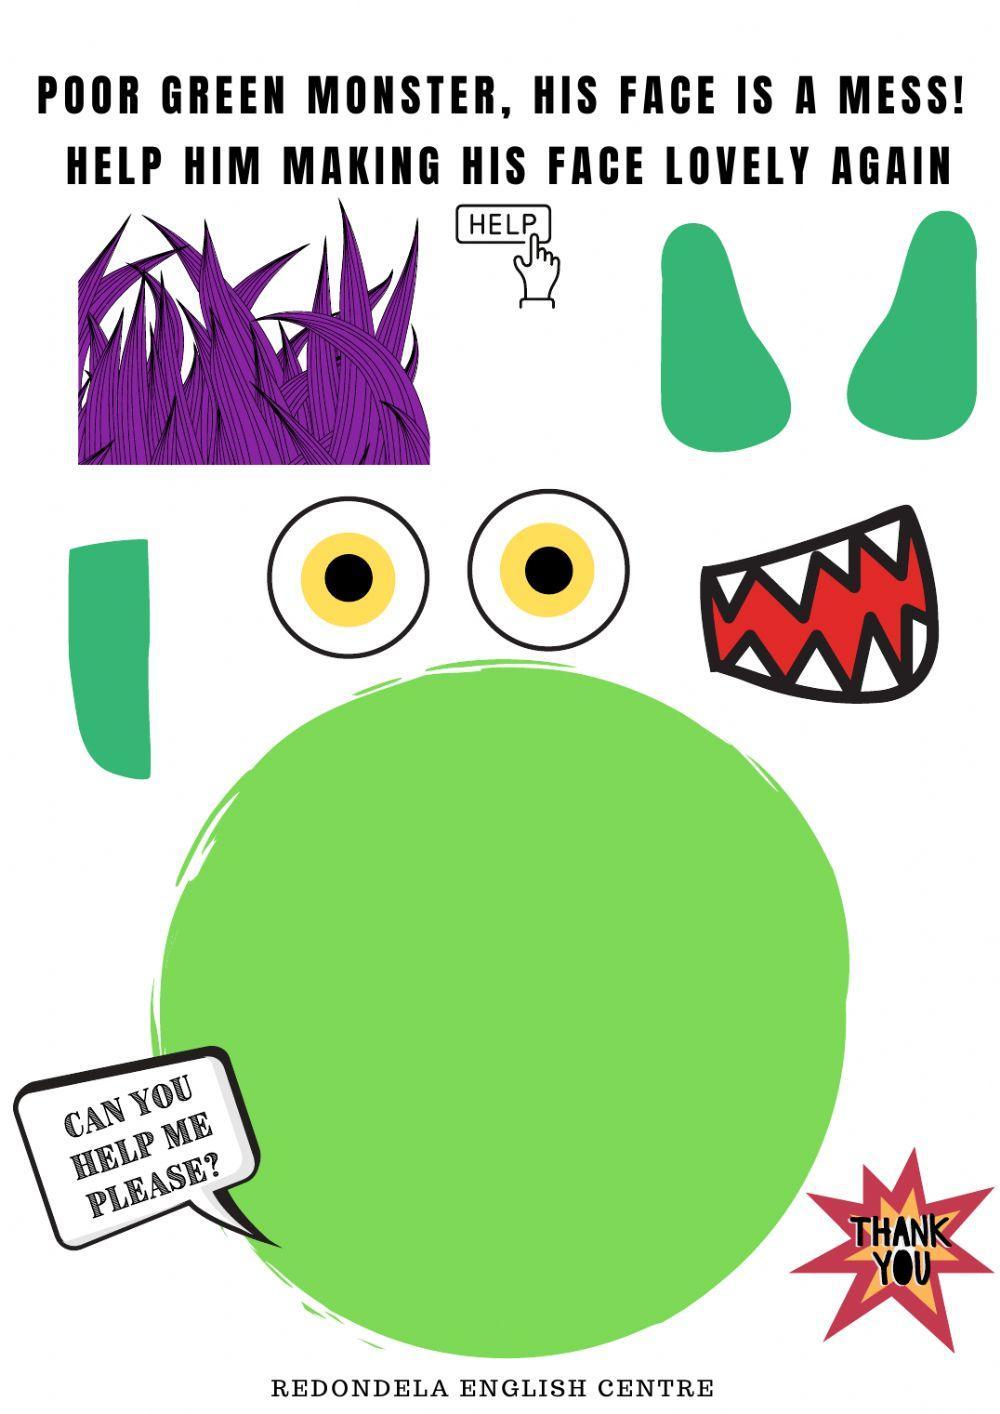 Big green monster